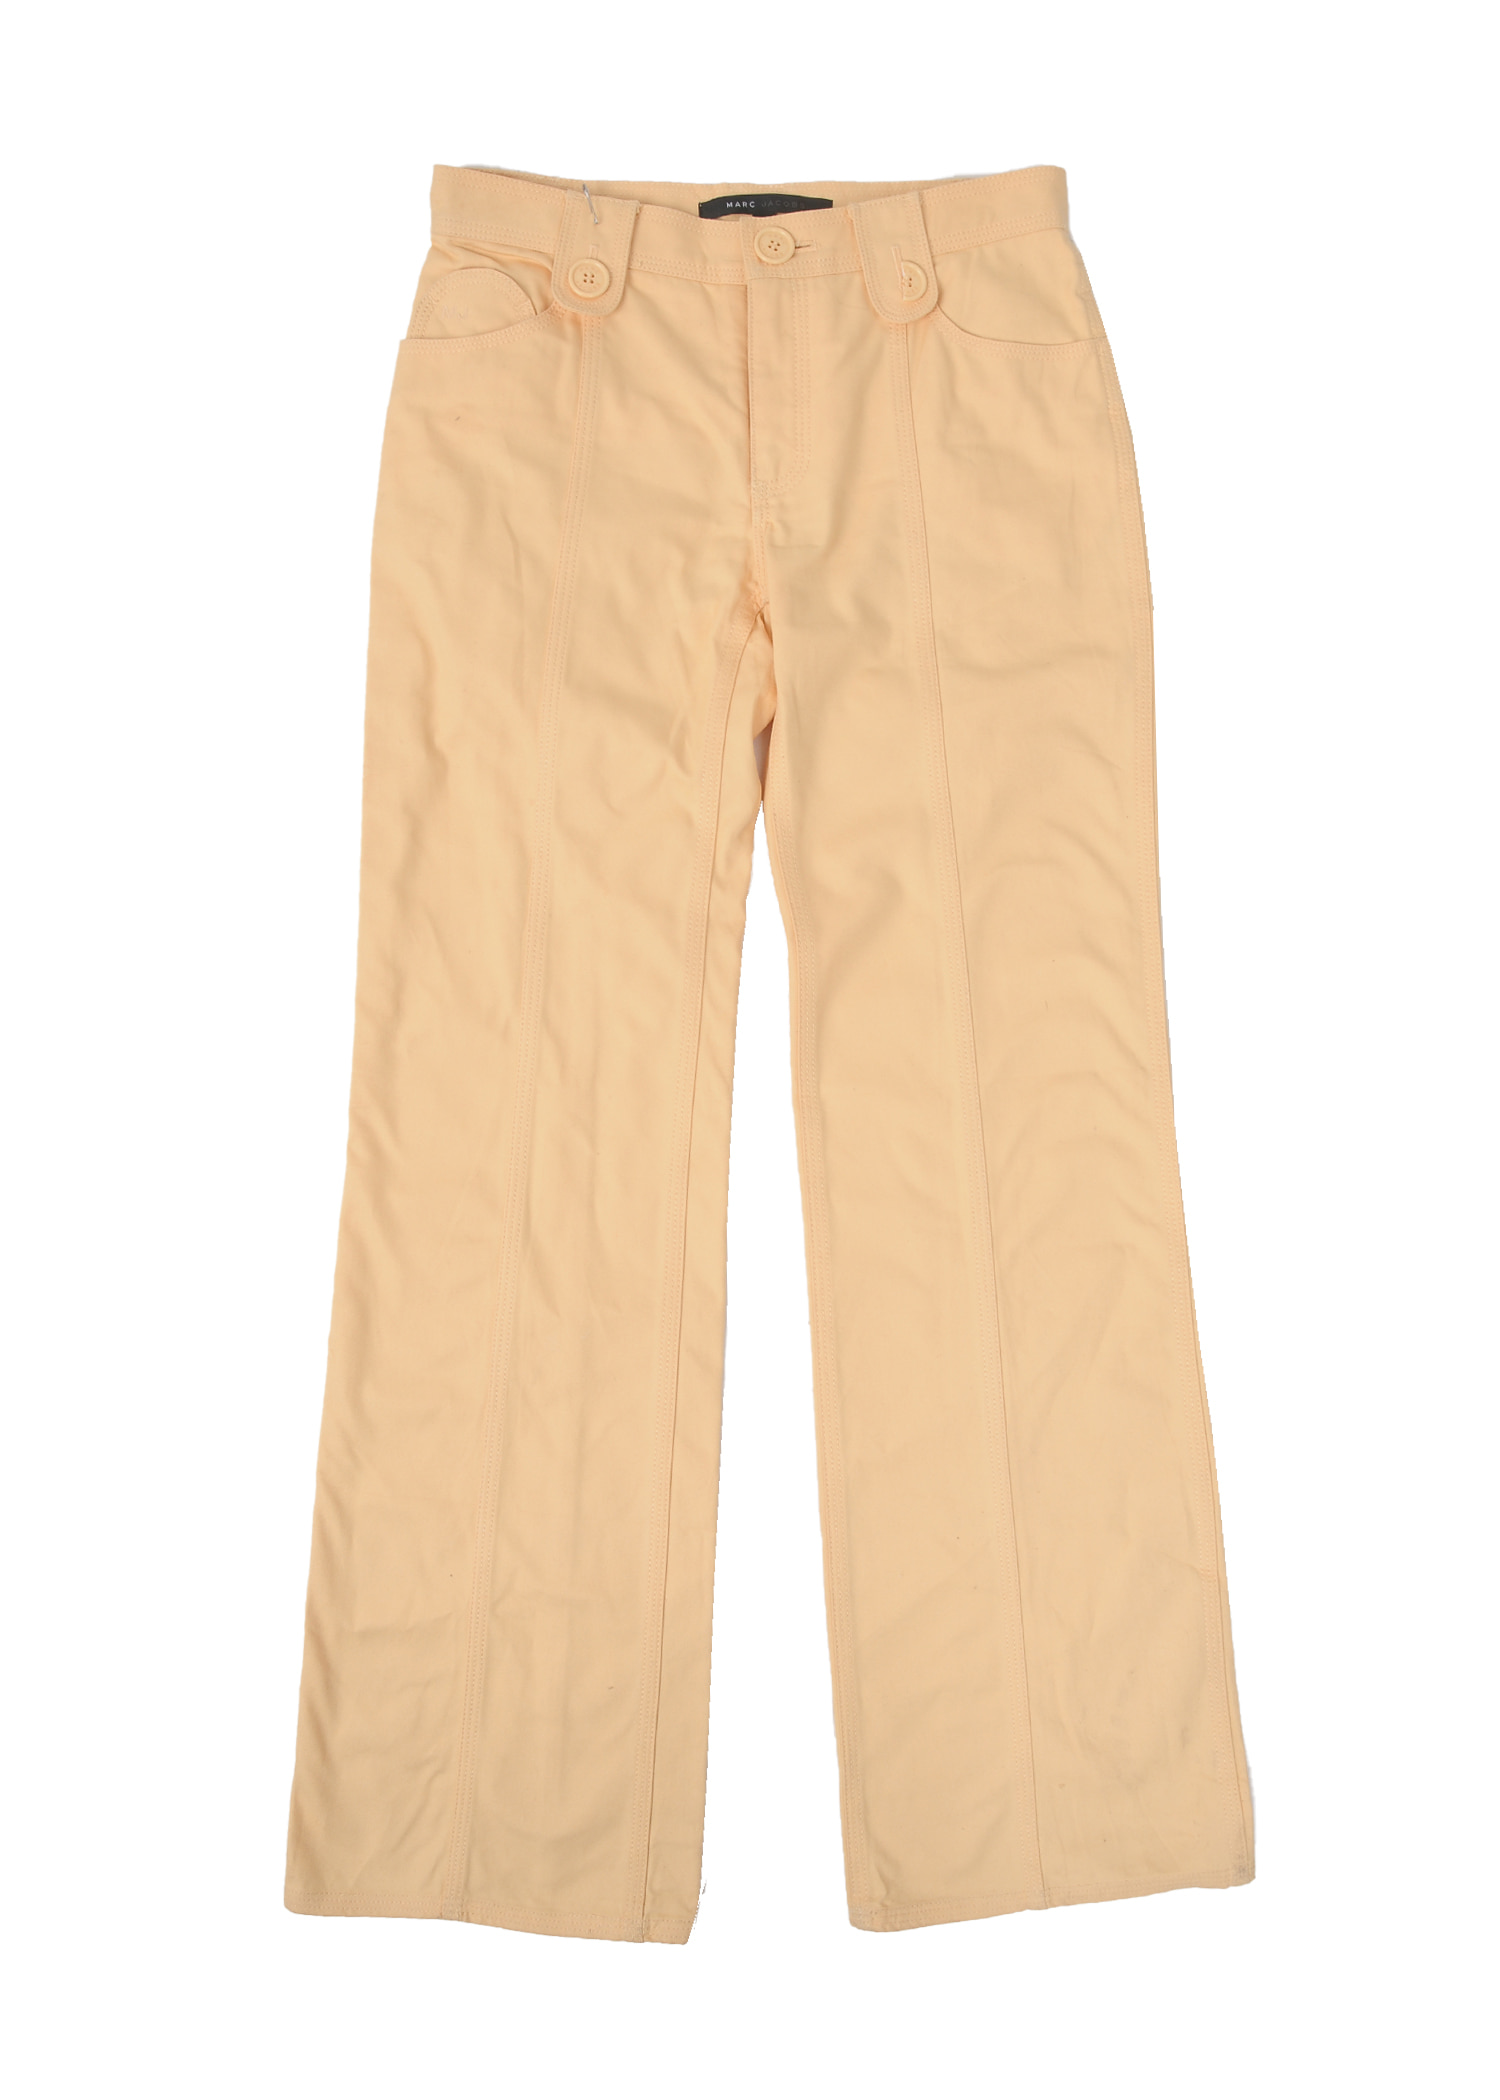 MARC JACOBS yellow cotton pants